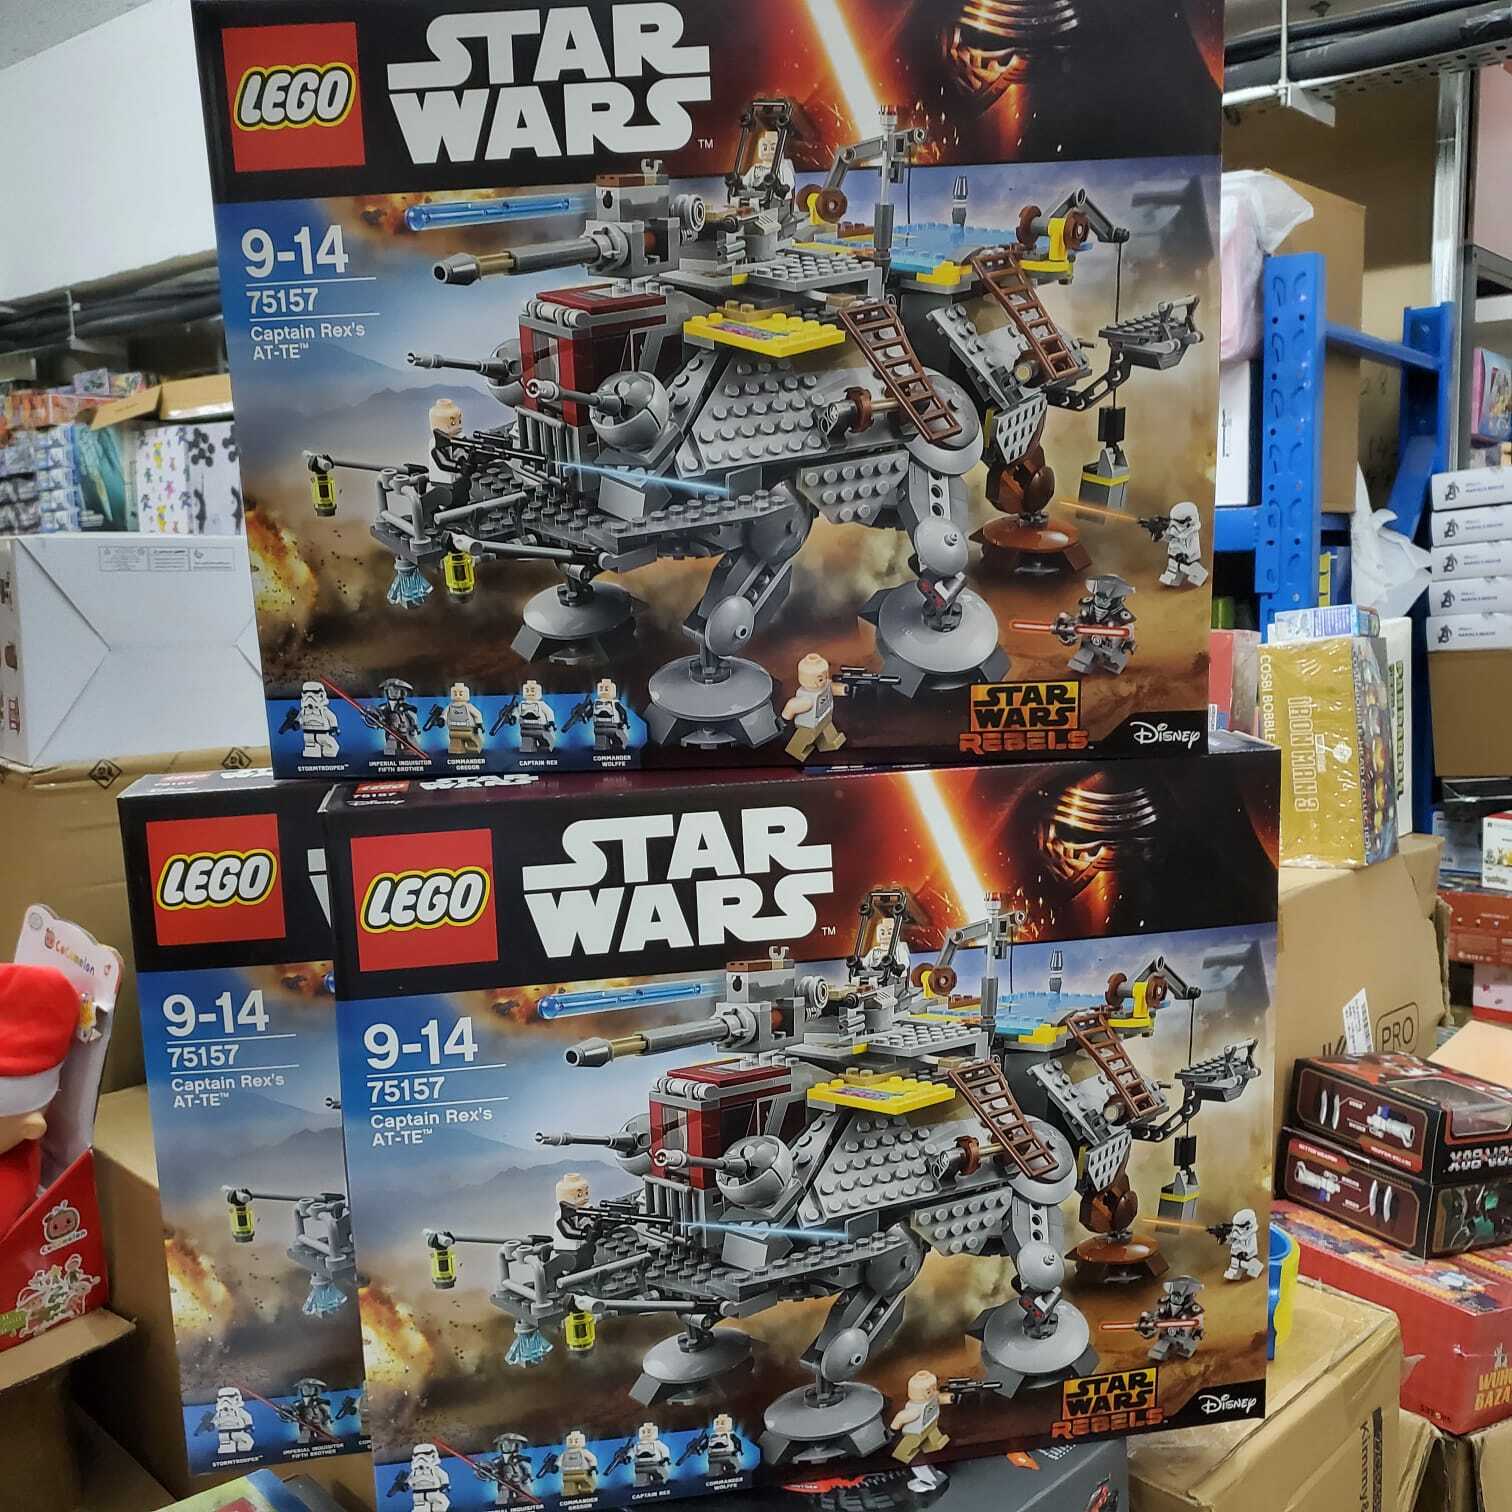 罕有絕版LEGO Star Wars 75157 雷克斯艦長的AT-TE